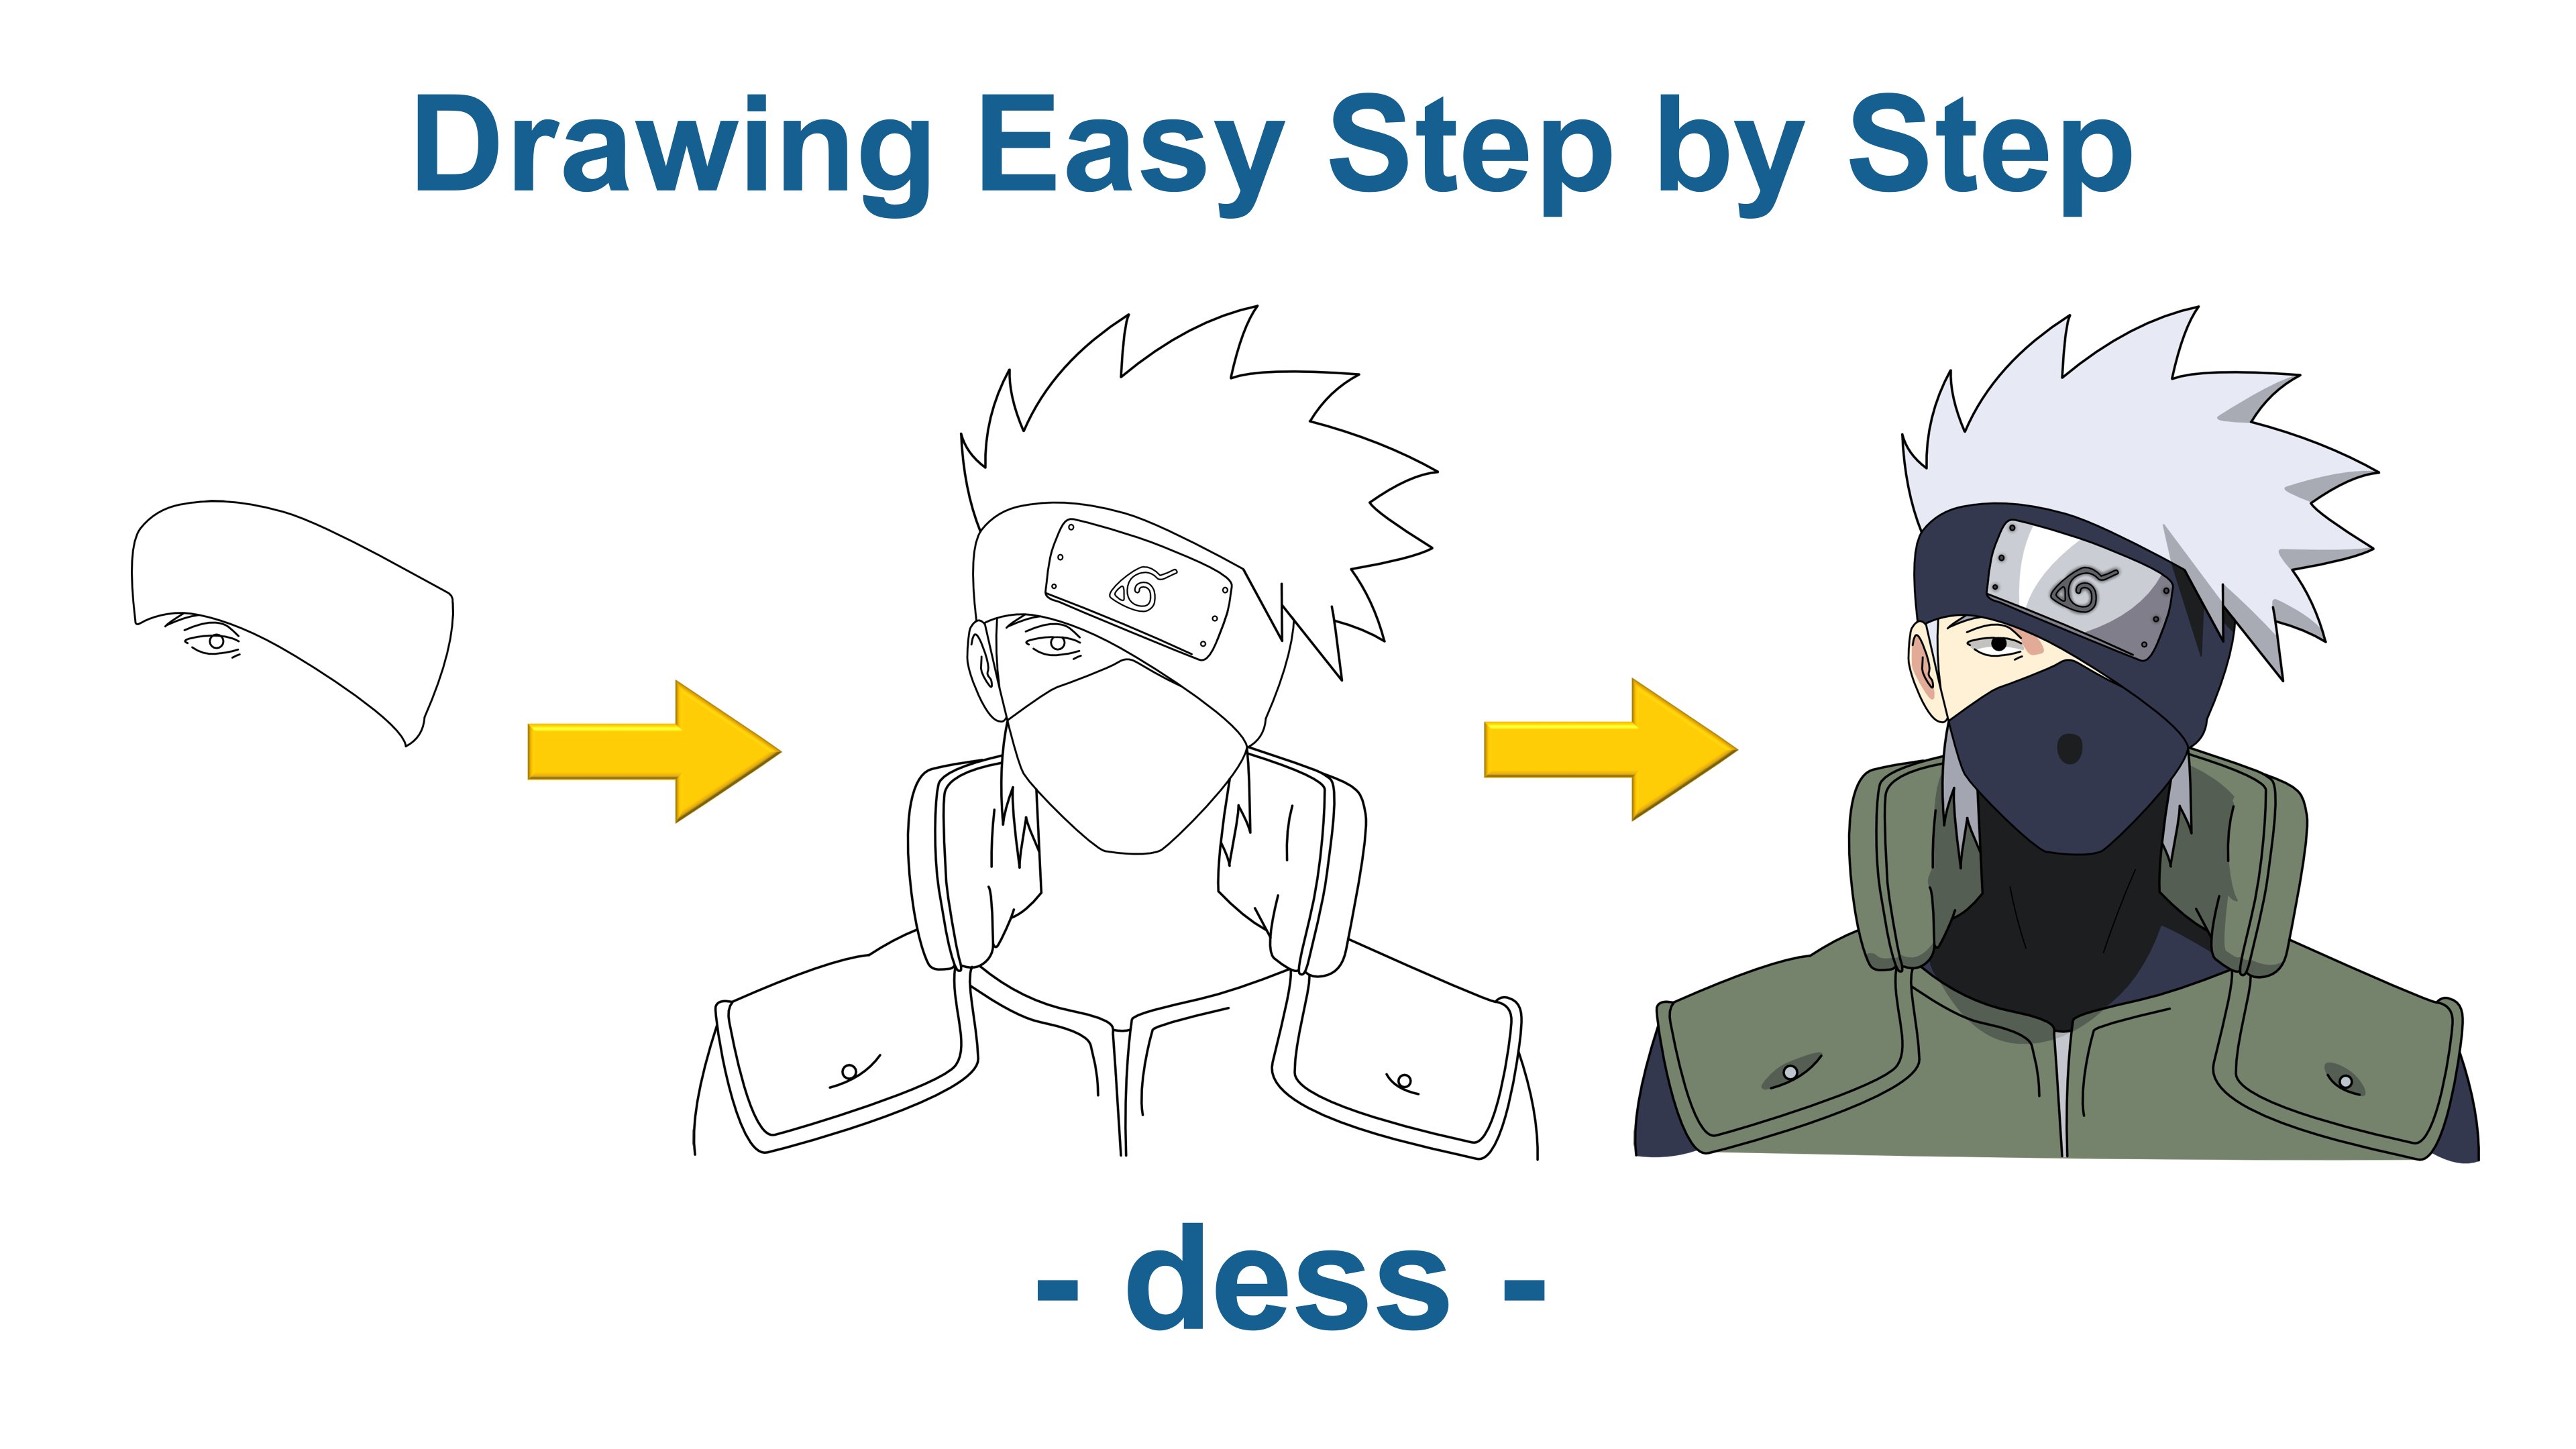 How to Draw Kakashi Hatake from Naruto (Naruto) Step by Step